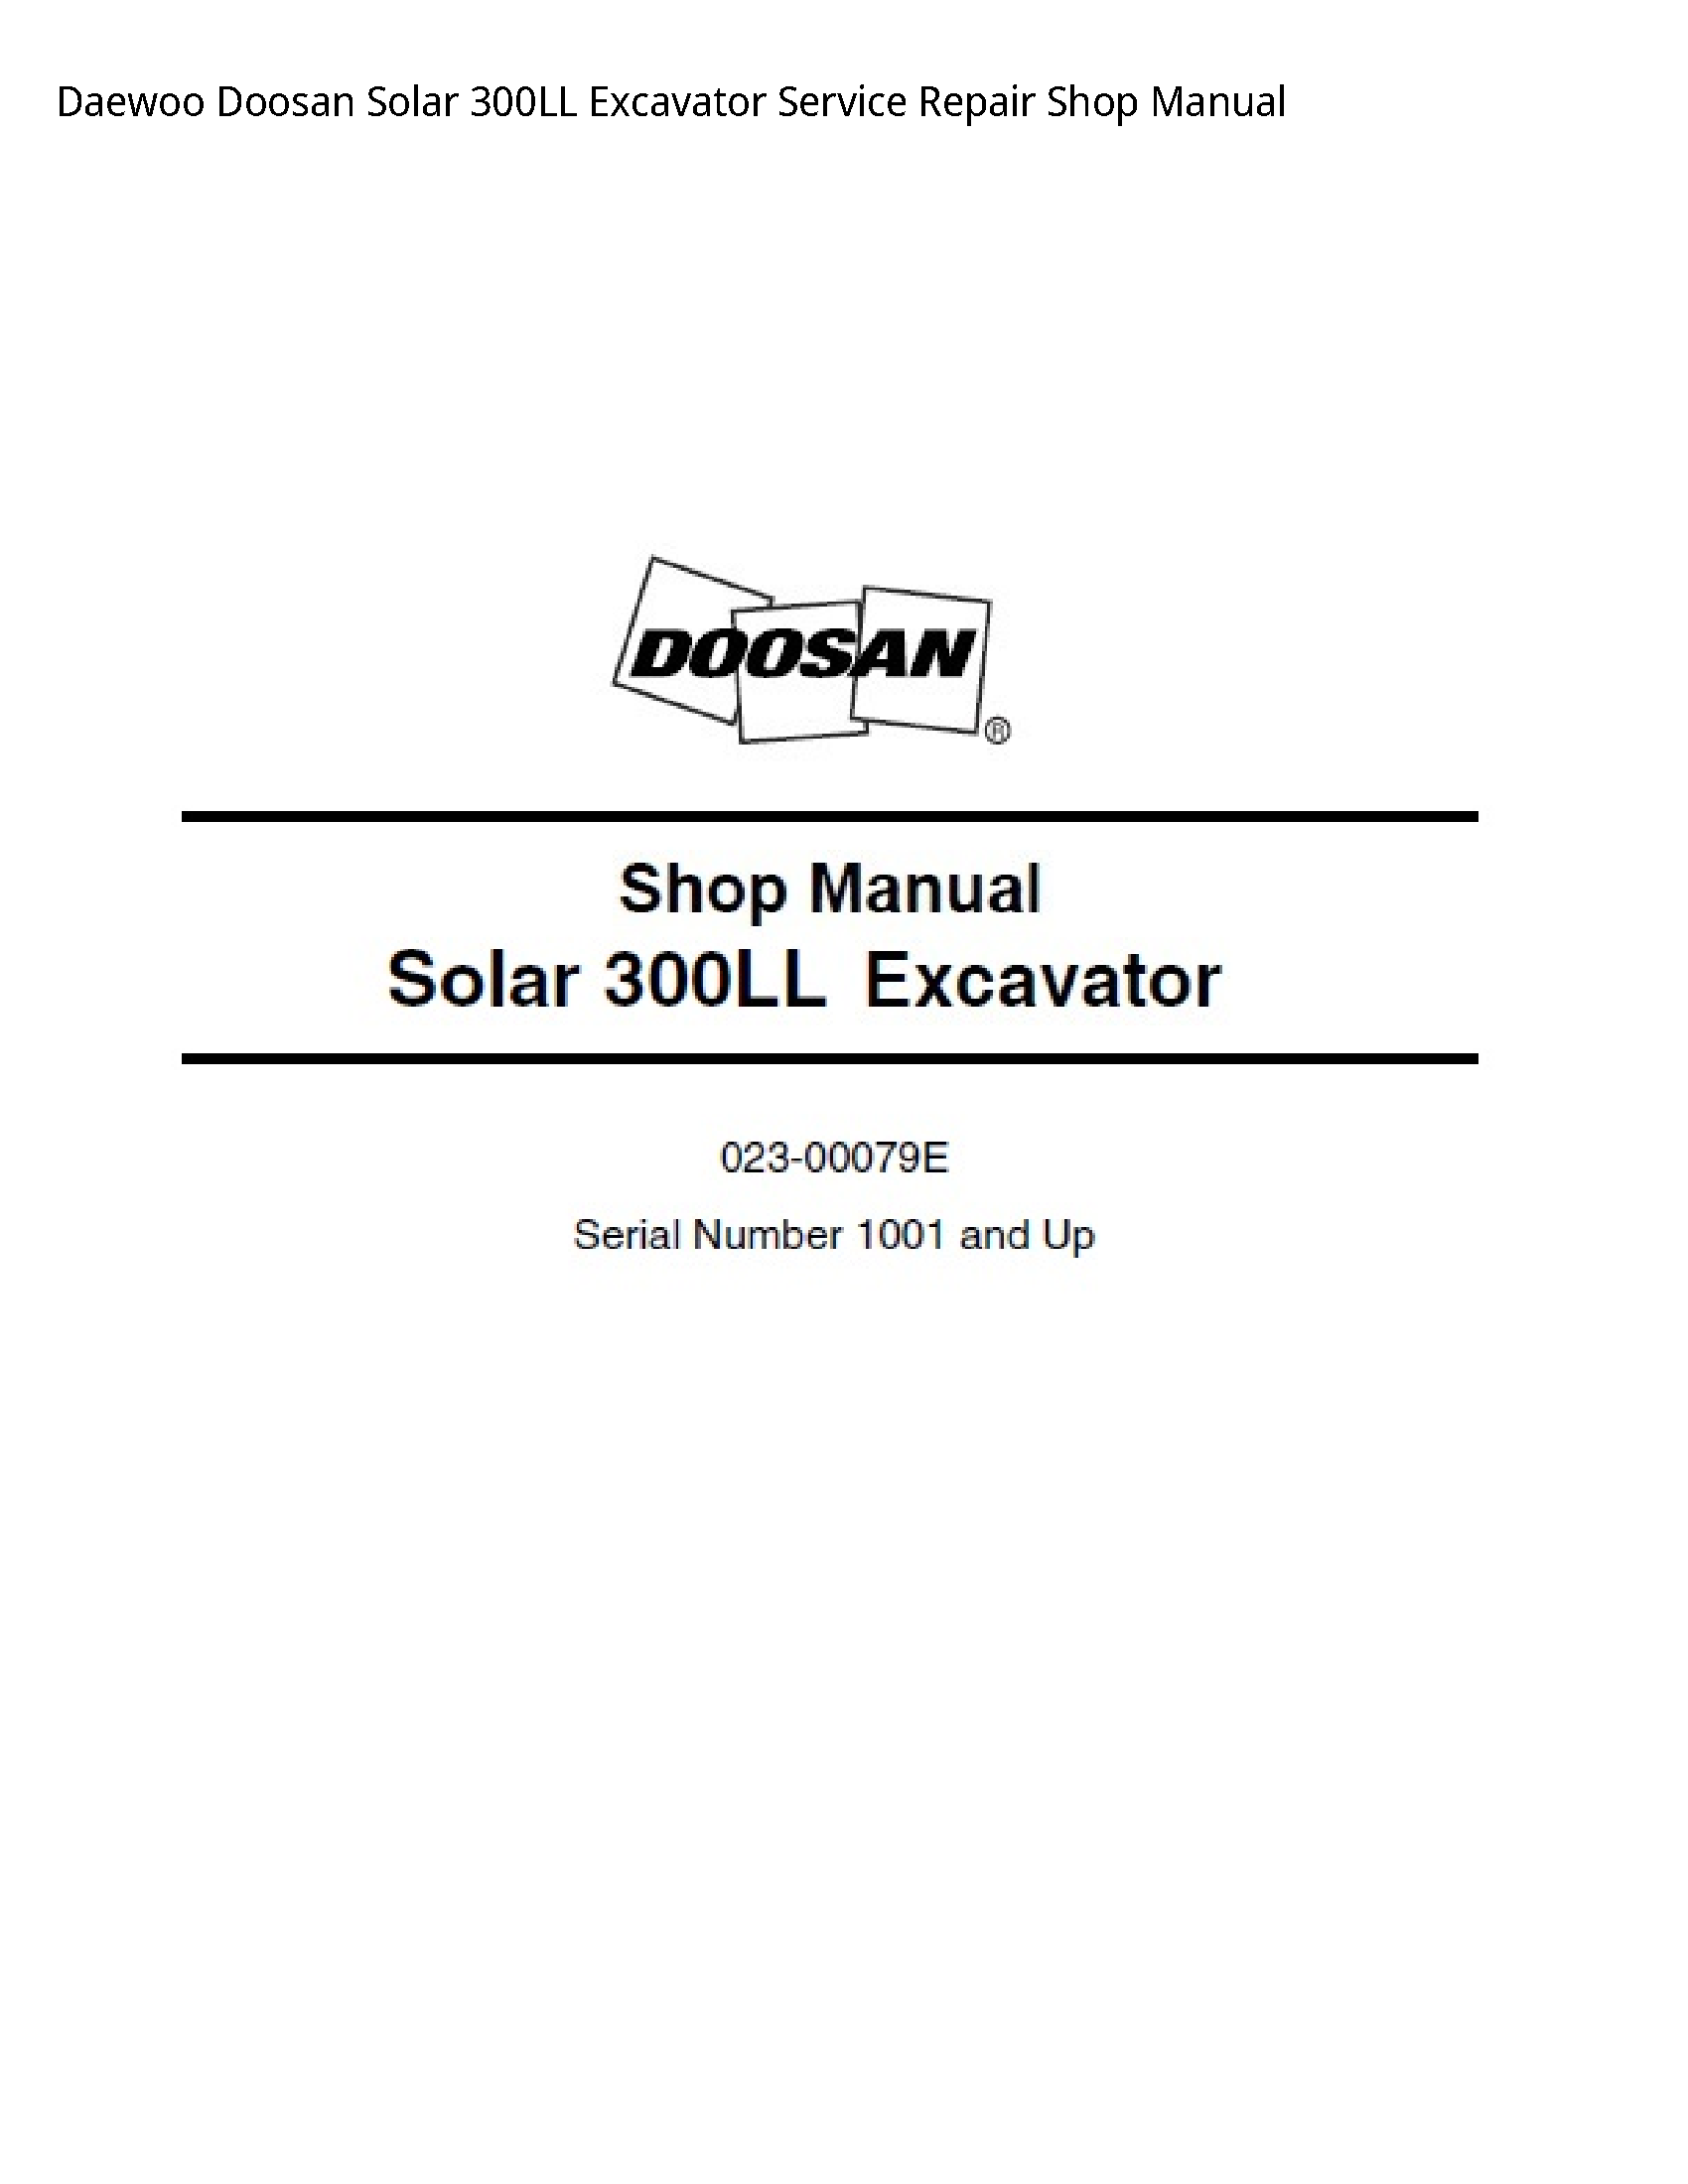 Daewoo Doosan 300LL Solar Excavator manual